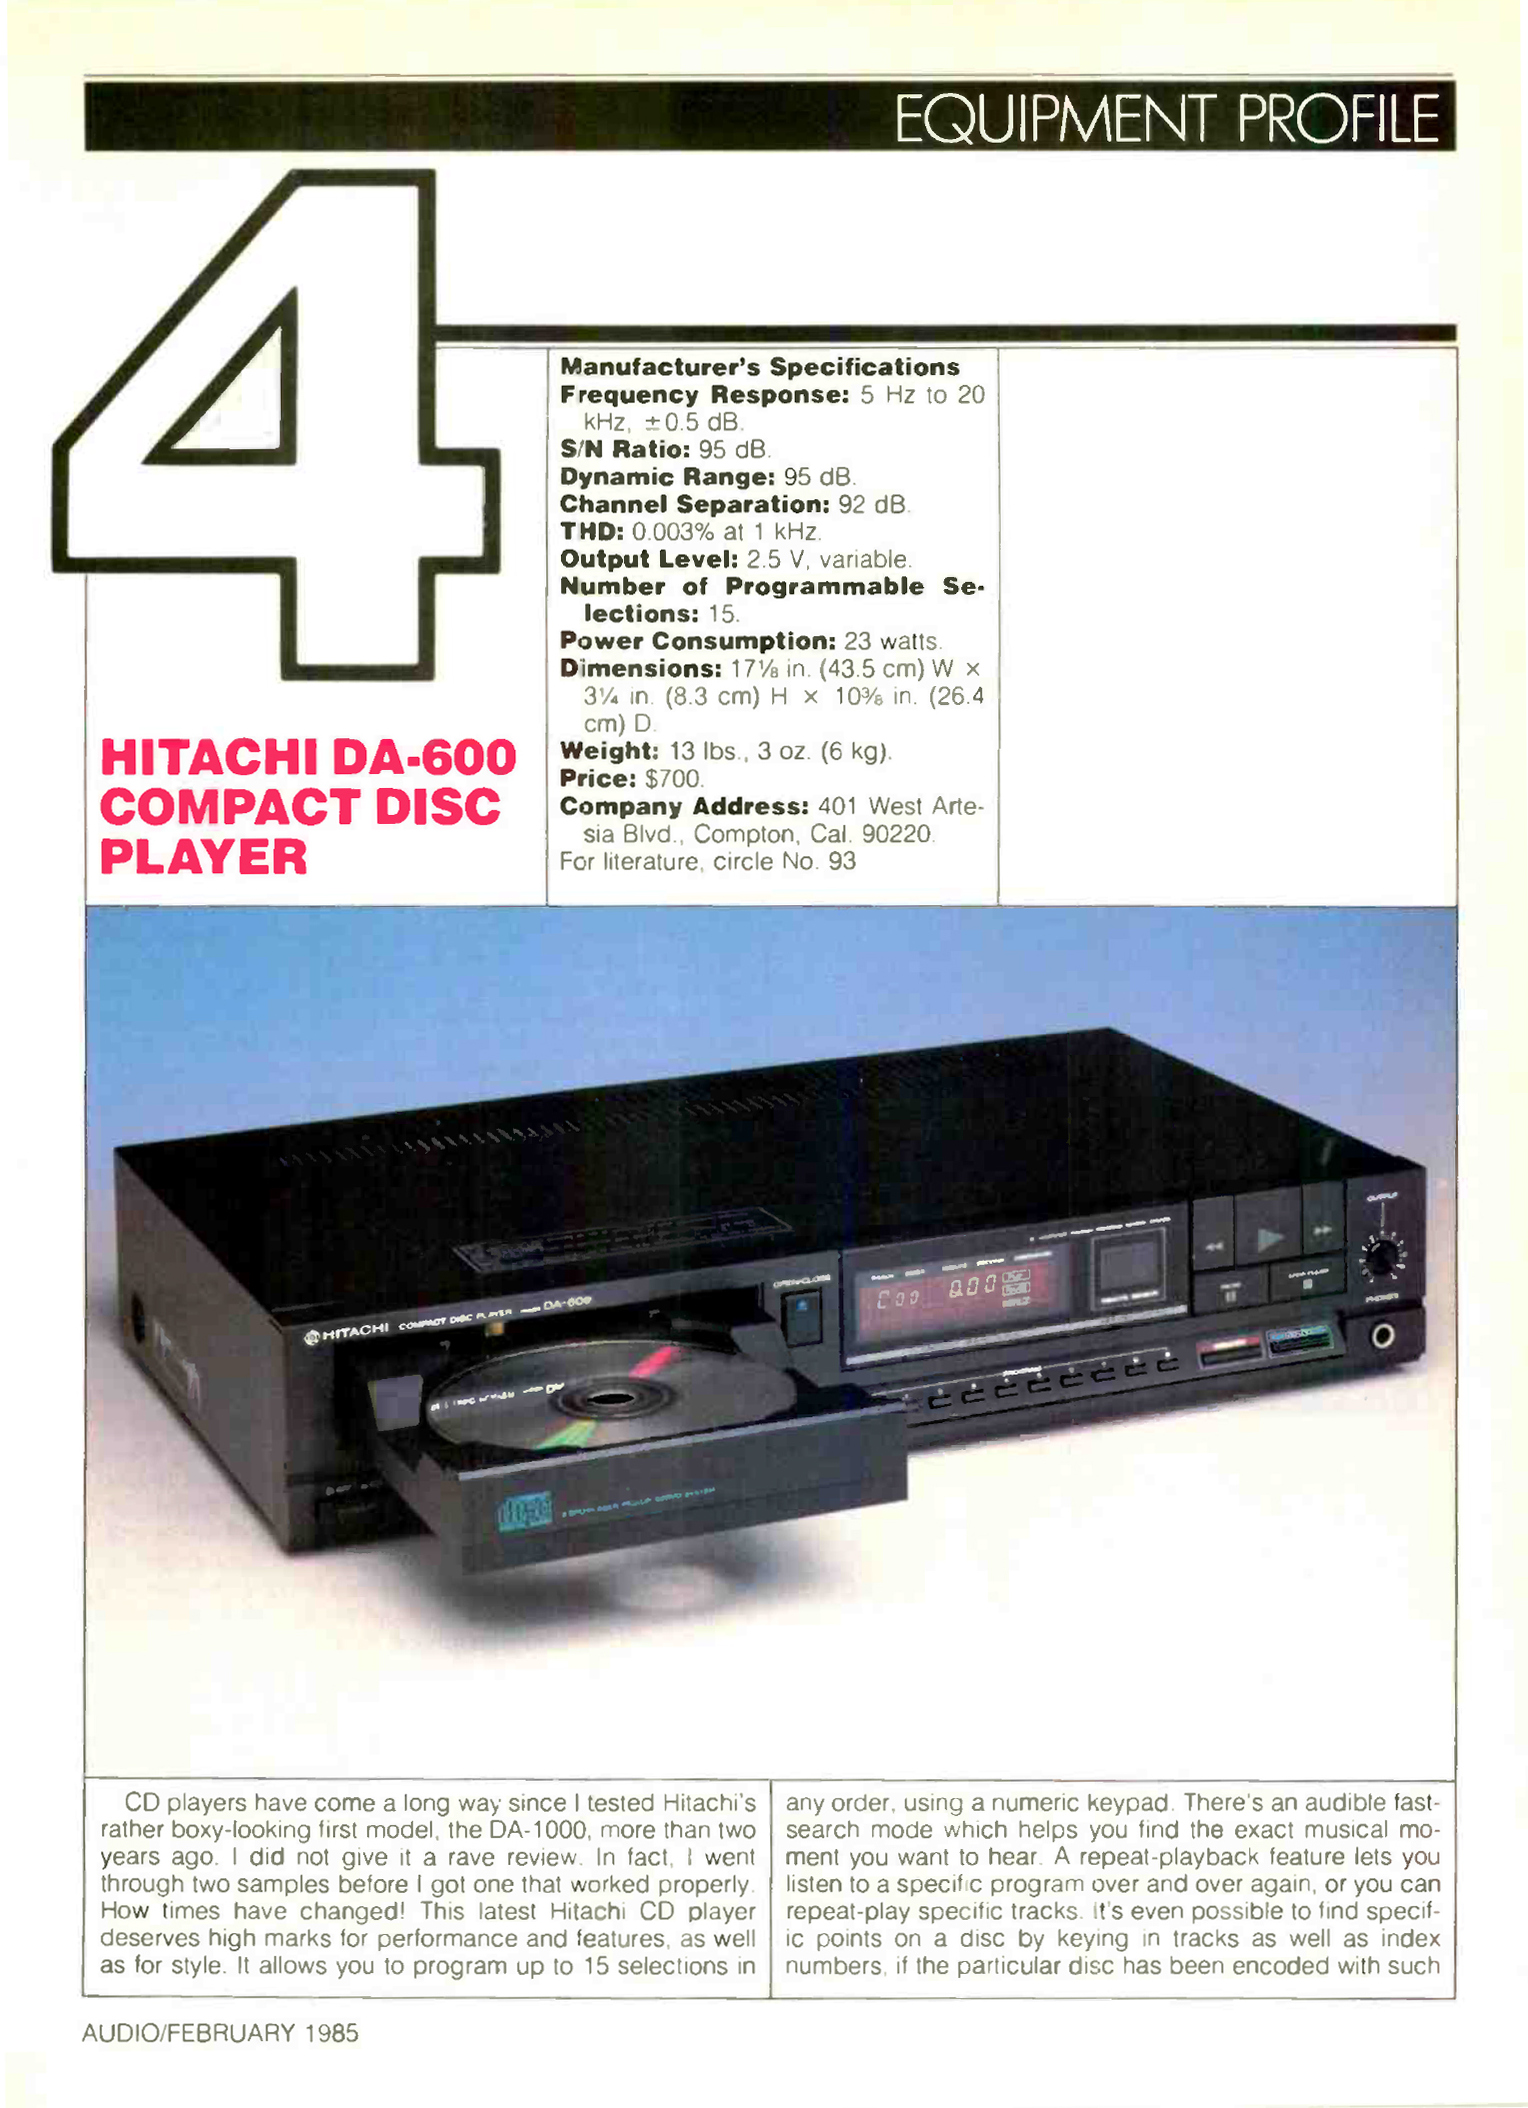 Hitachi DA-600-Werbung-1985.jpg